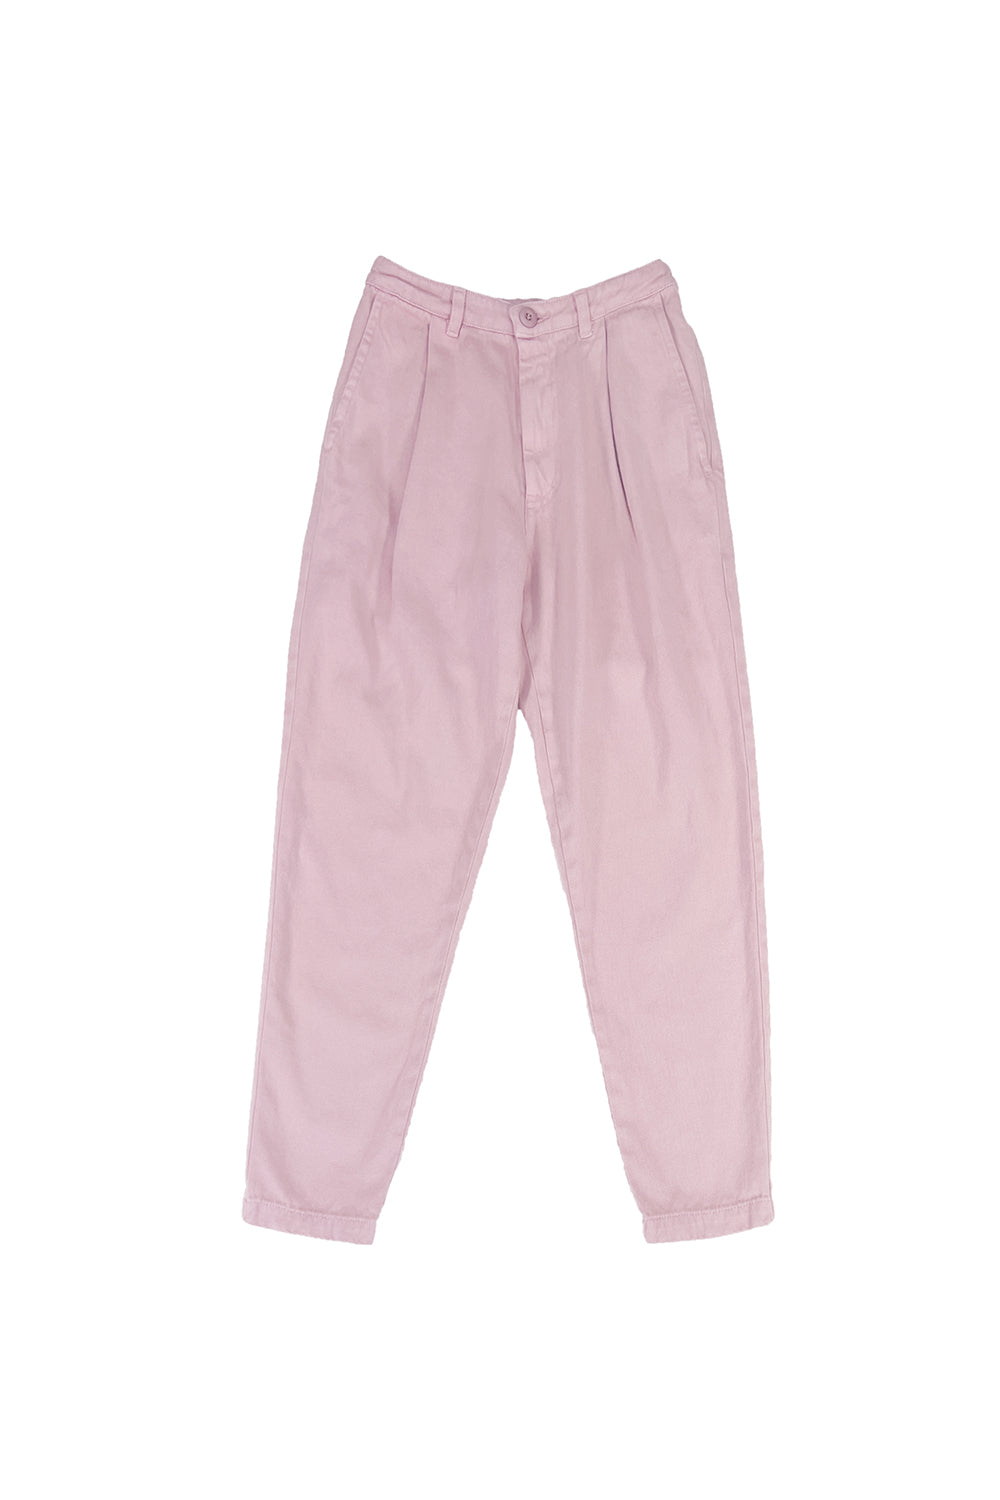 Acuma Pant | Jungmaven Hemp Clothing & Accessories / Color: Rose Quartz